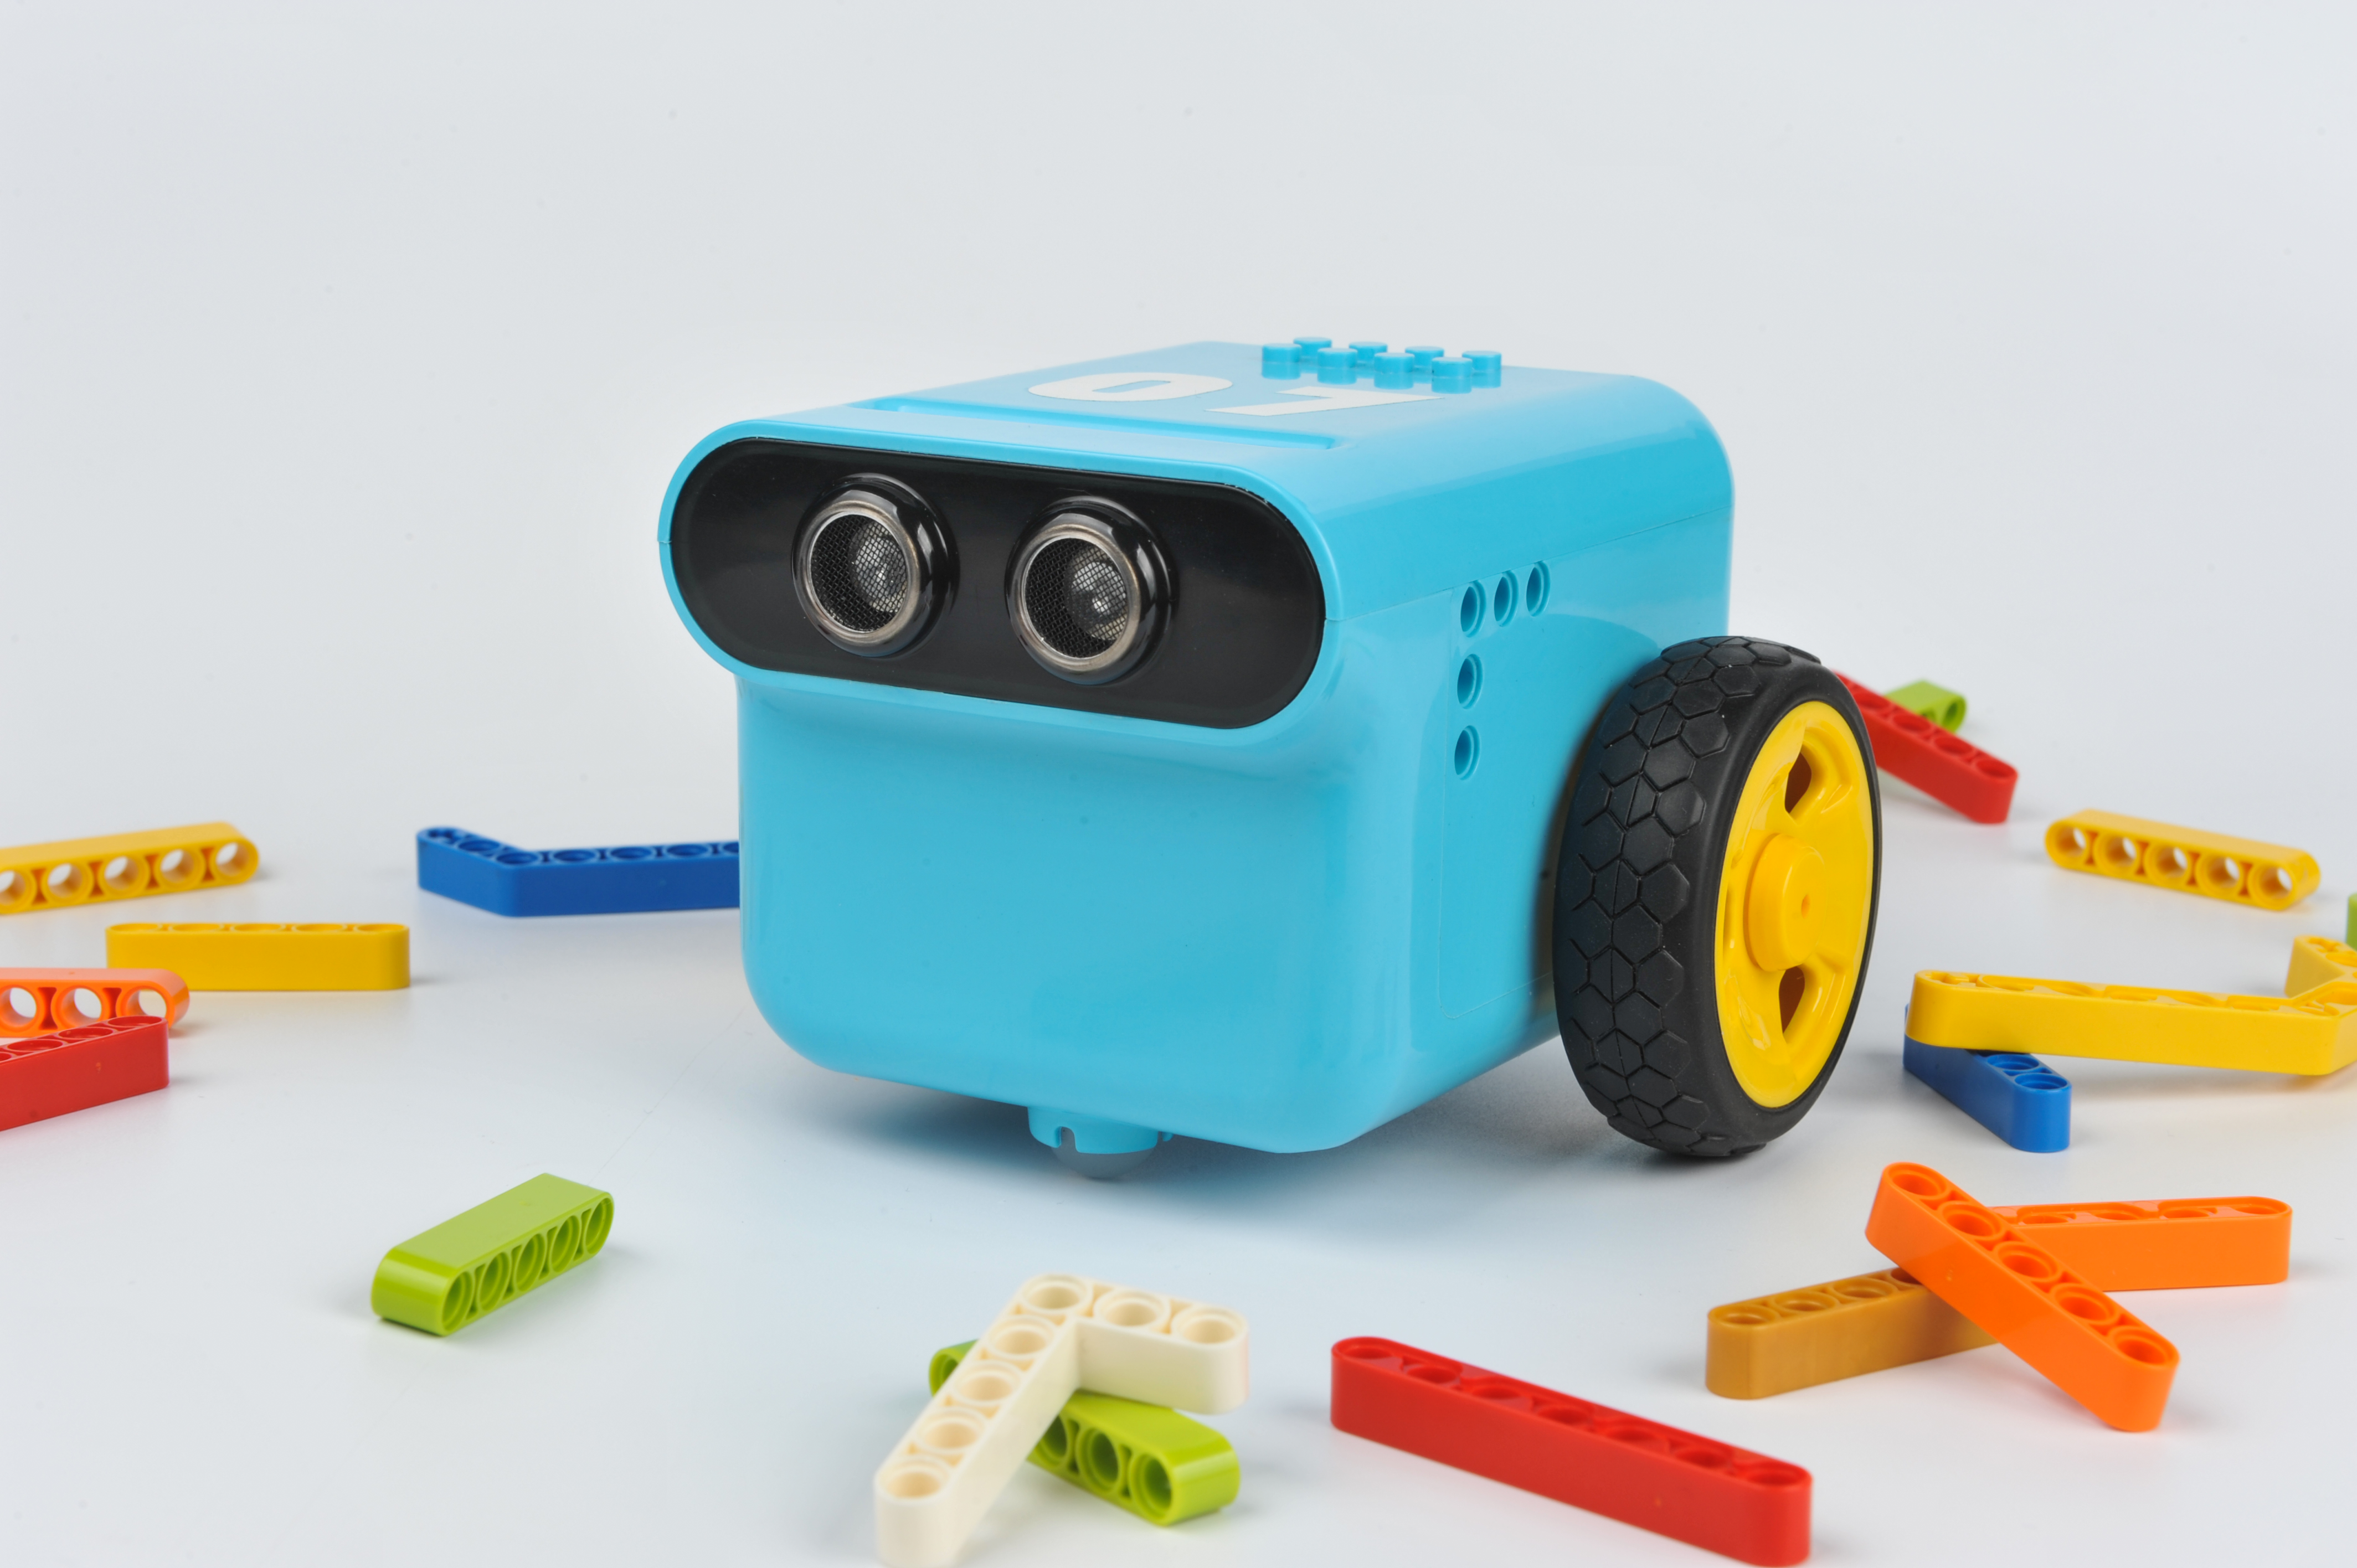 Elecfreaks TPBot Car Kit: Smart Car Robot Kit for micro:bit